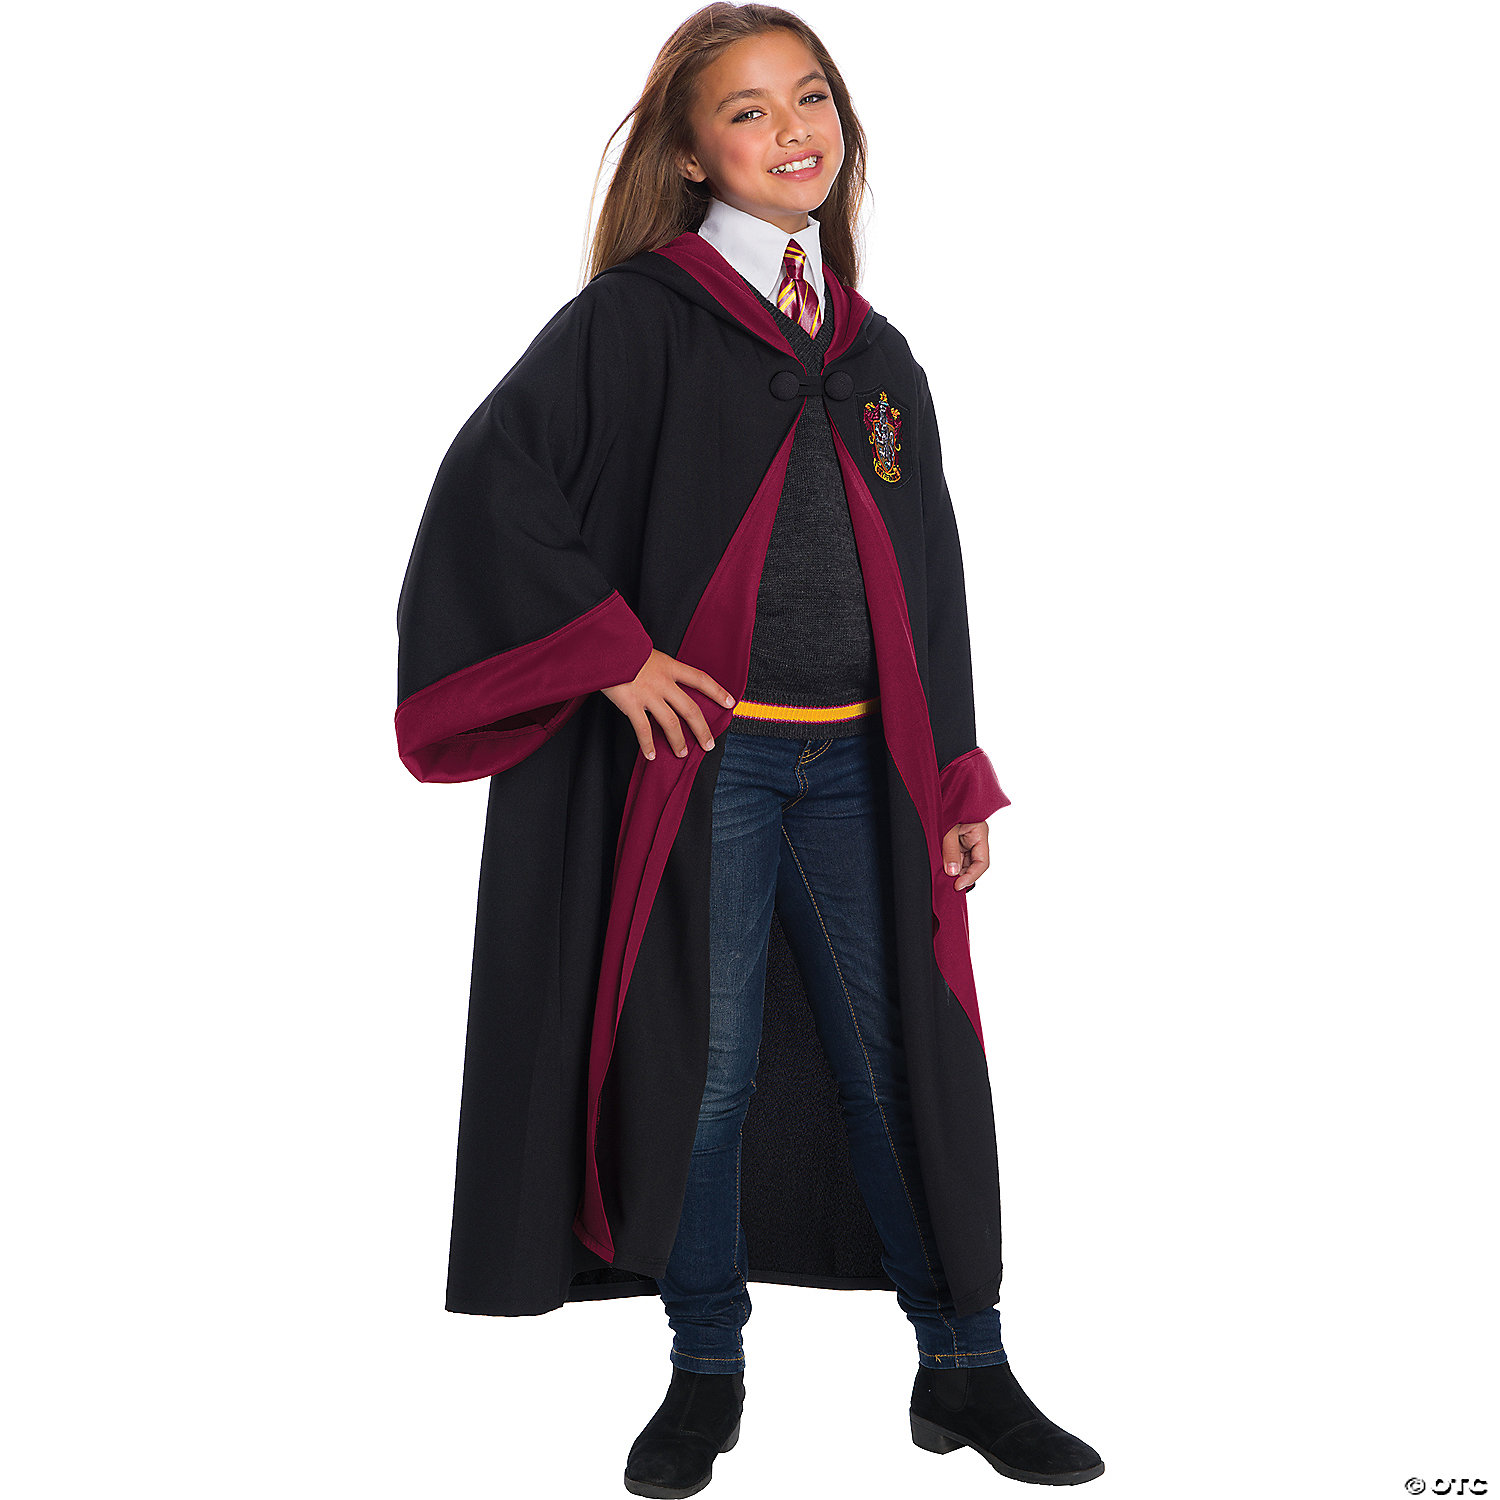 Kid's Harry Potter Deluxe Gryffindor Costume Kit